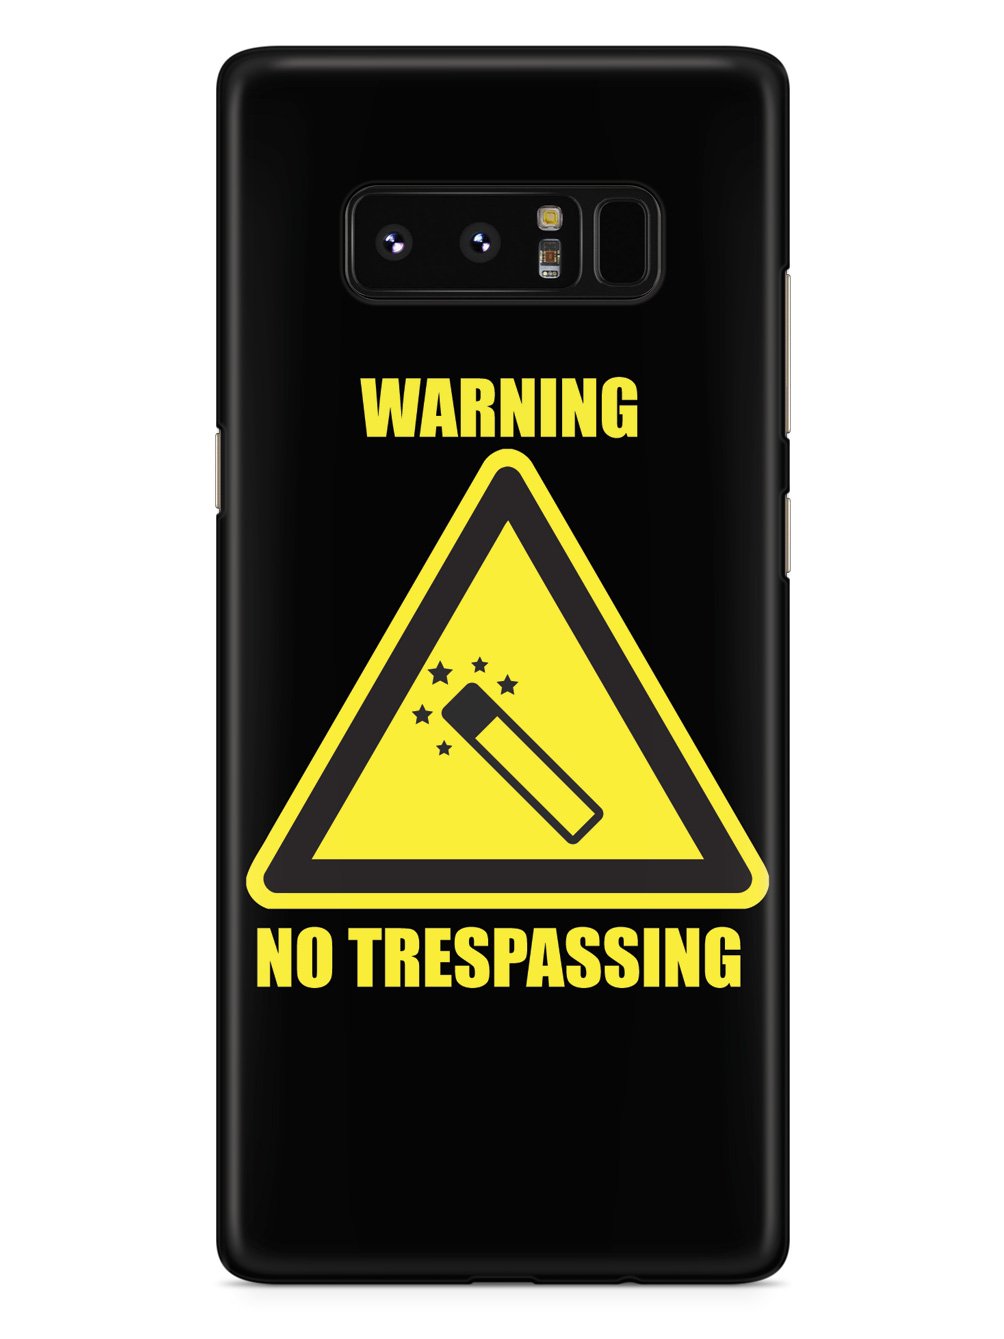 Wand - No Trespassing - Black Case